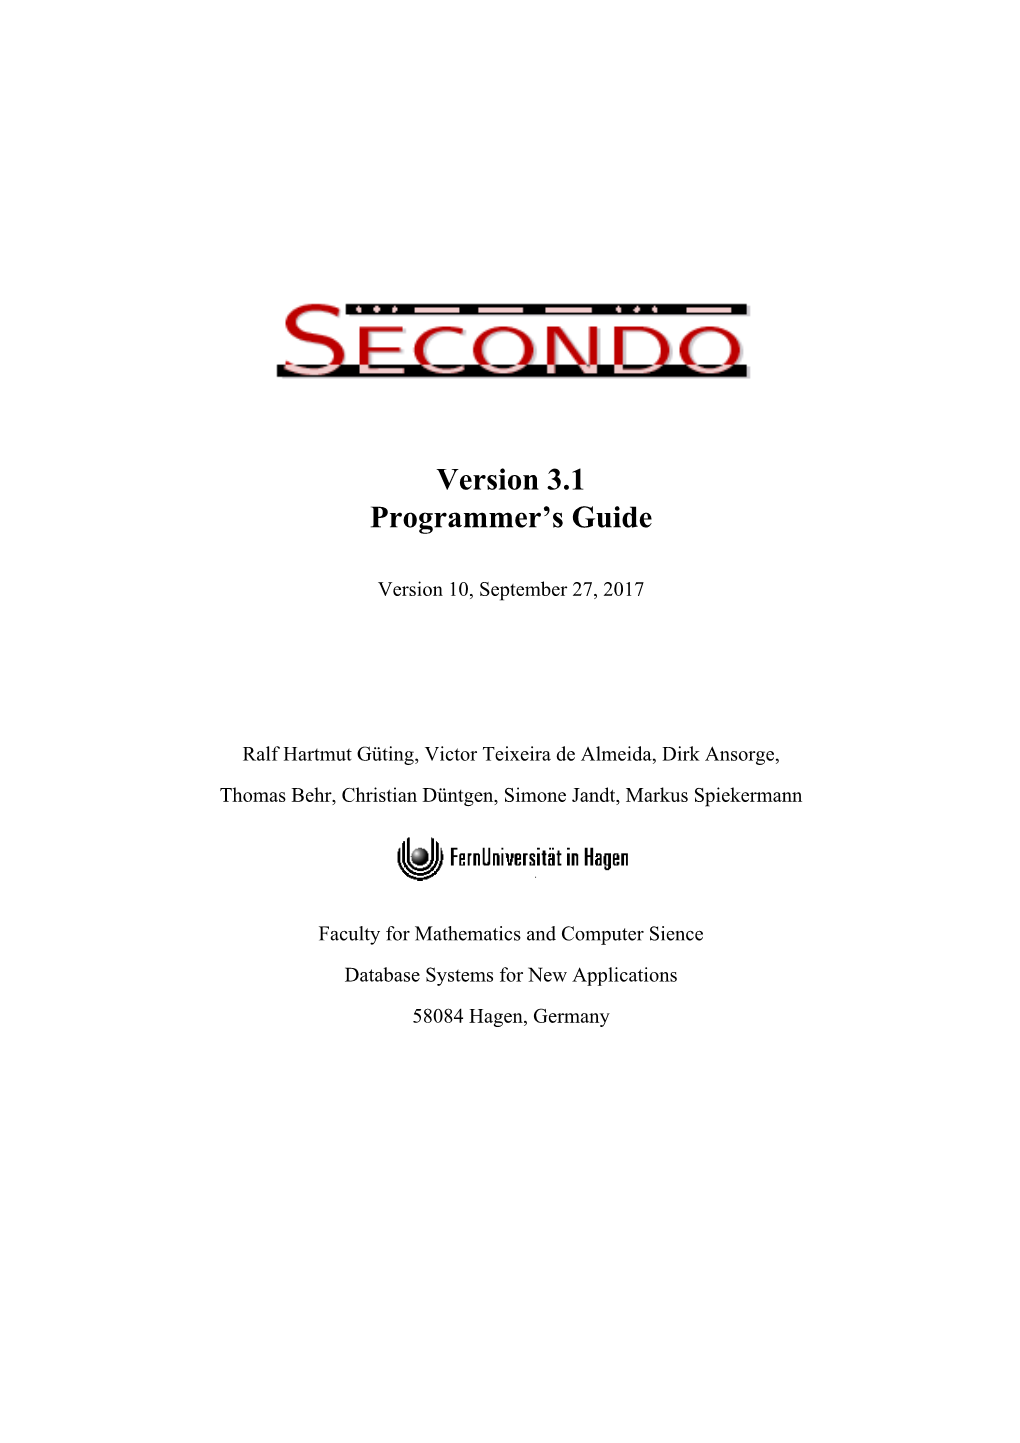 Version 3.1 Programmer's Guide